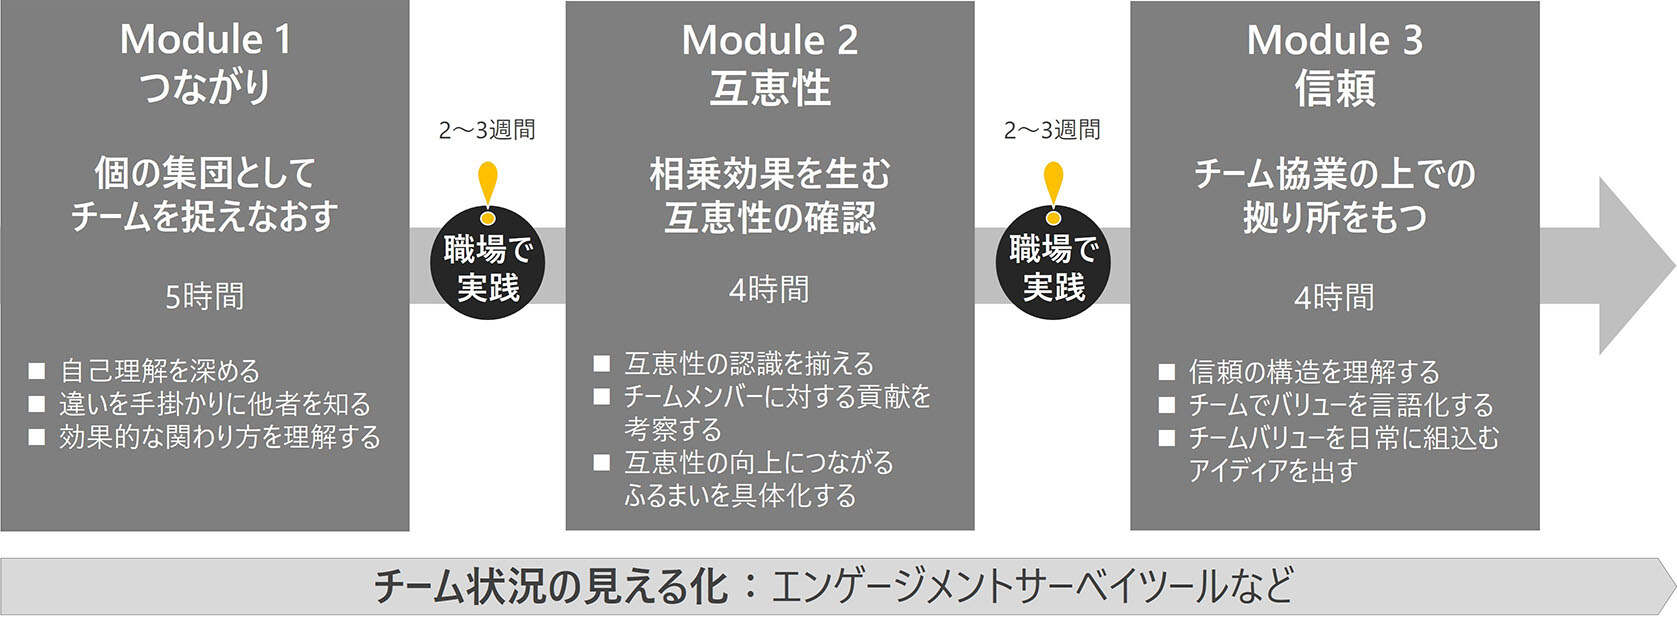 3 modules